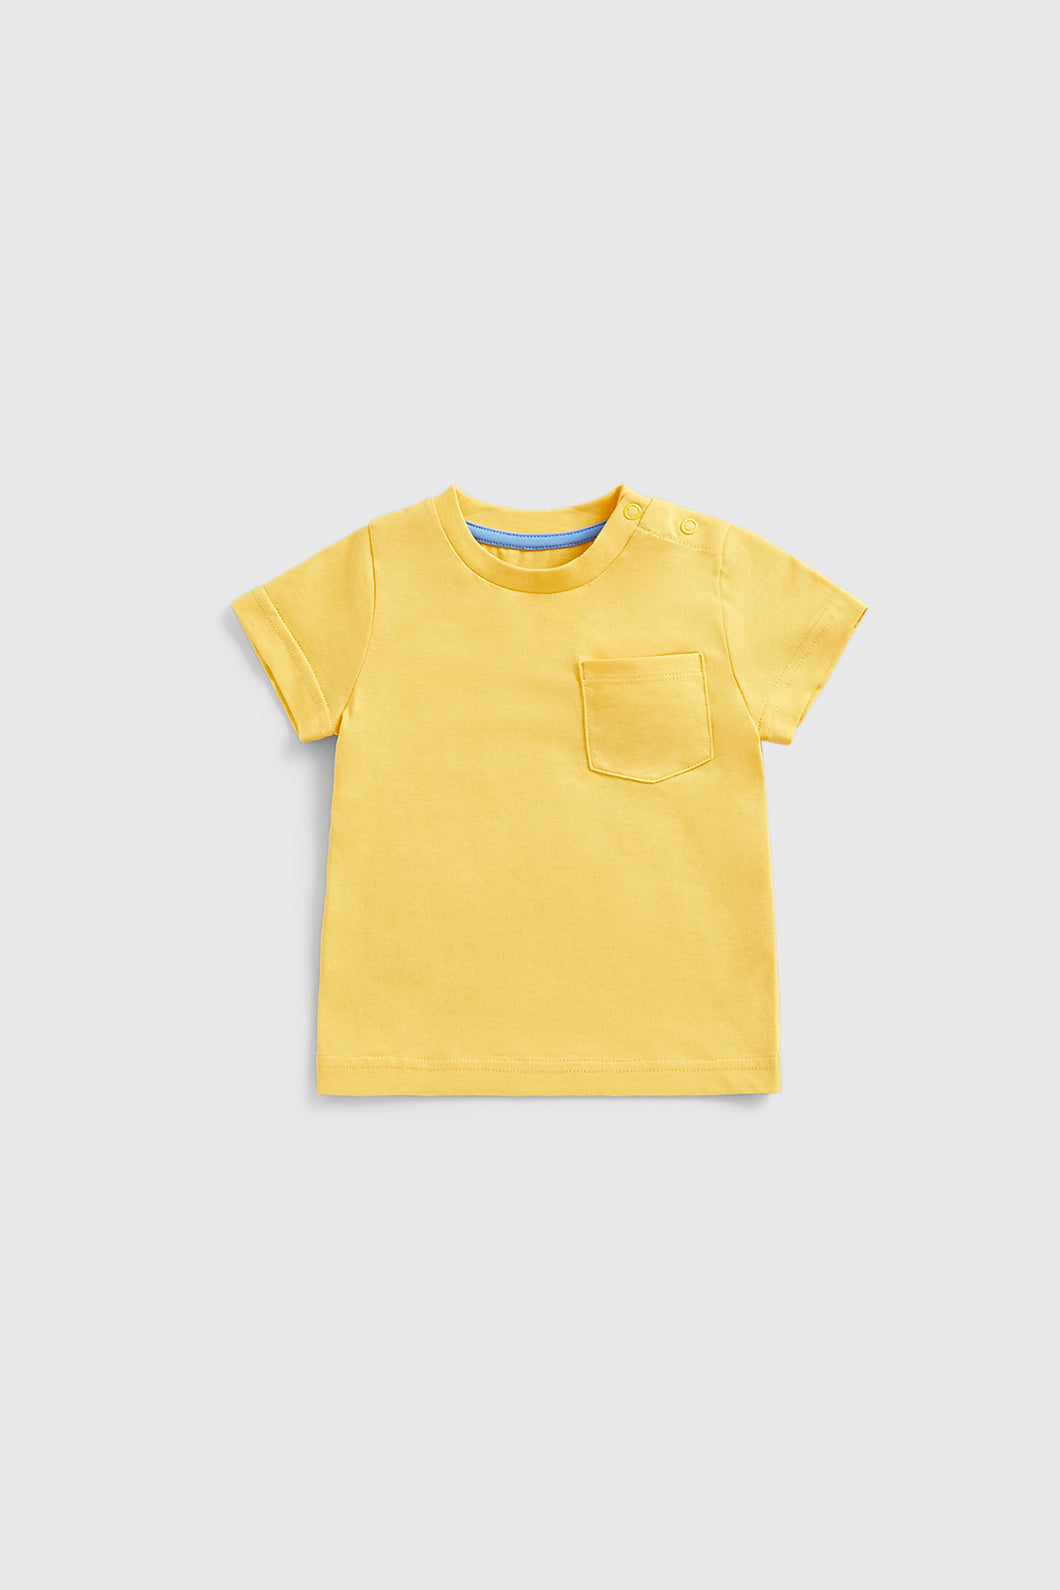 Mothercare Yellow T-Shirt